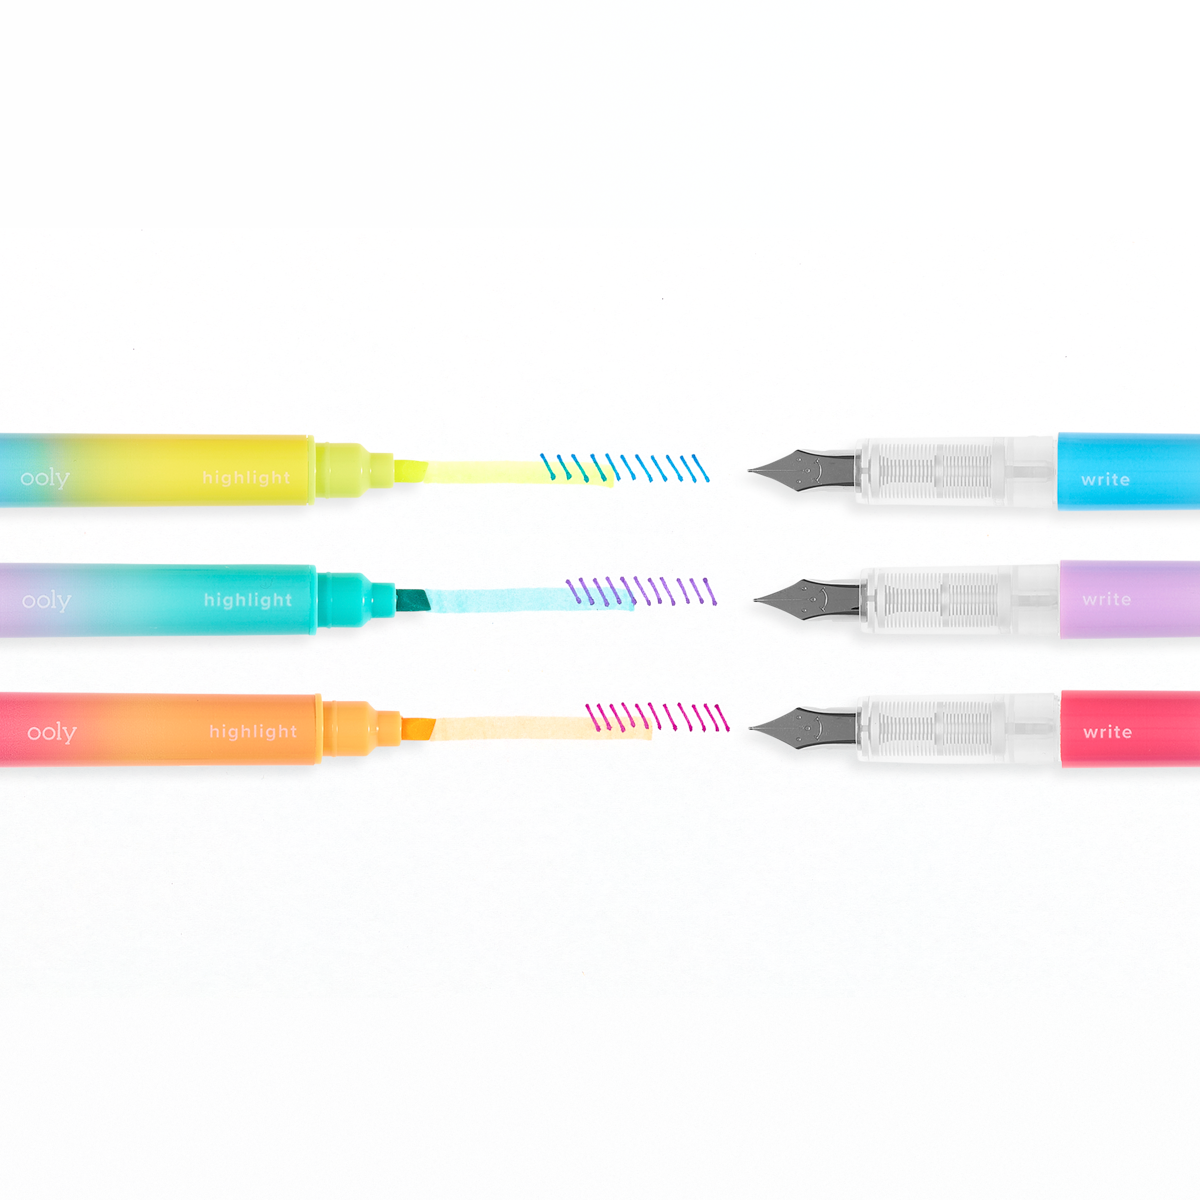 The Best Highlighter Pens